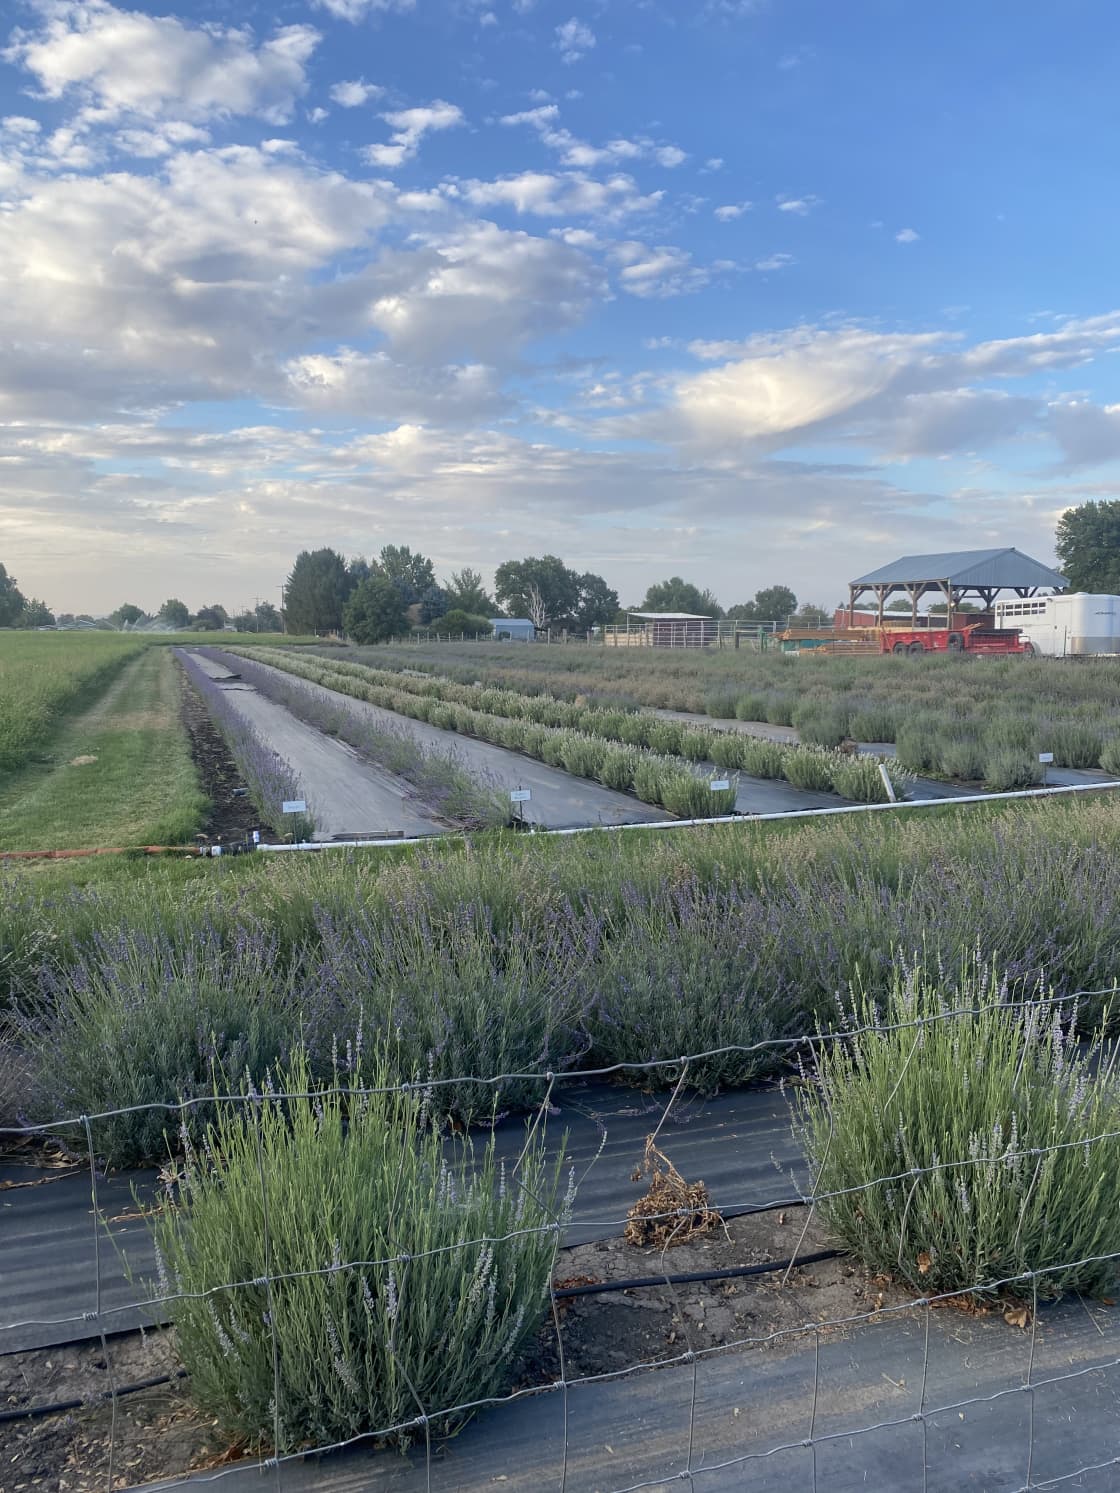 Relaxing, Peaceful Lavender Farm